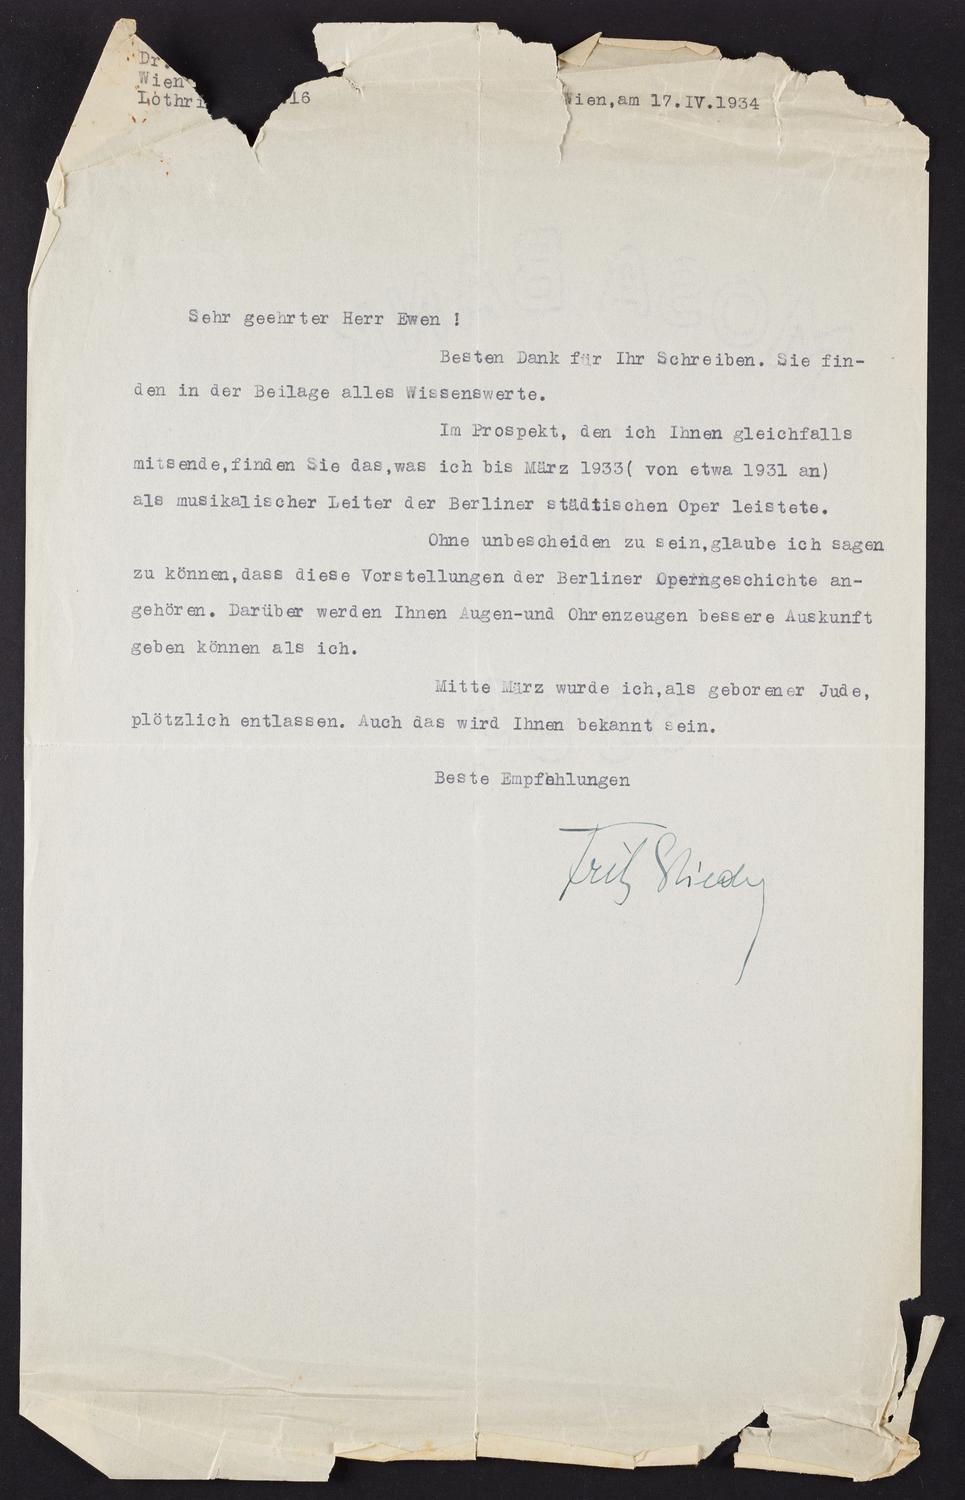 Correspondence from Fritz Stiedry to David Ewen